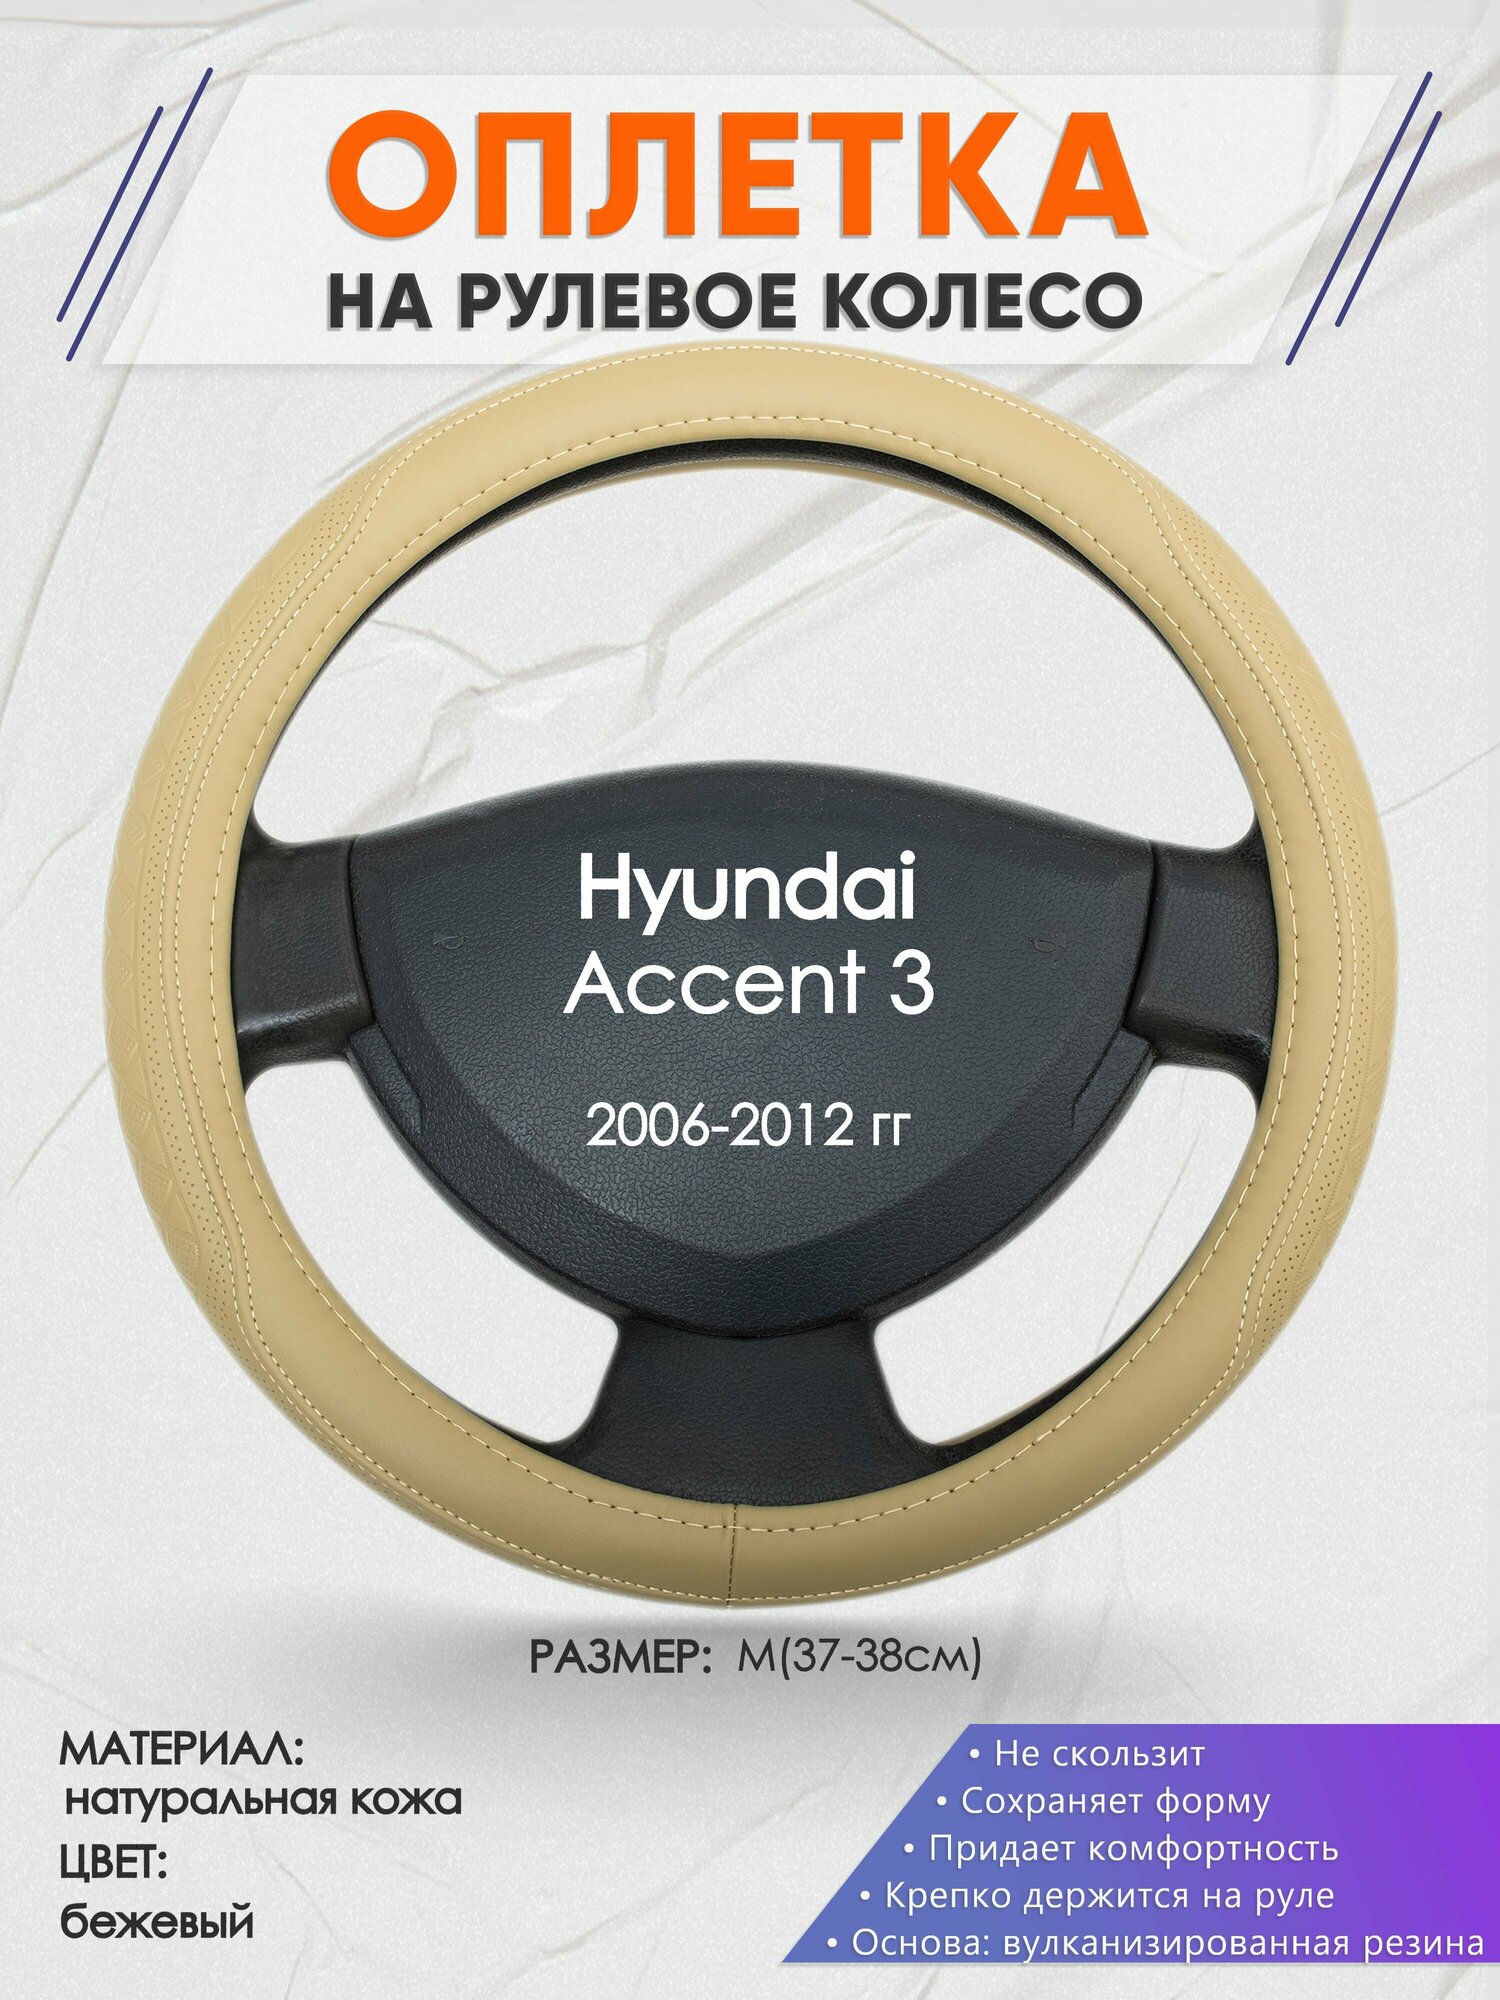 Оплетка на руль для Hyundai Accent 3(Хендай Акцент 3) 2006-2012, M(37-38см), Натуральная кожа 91